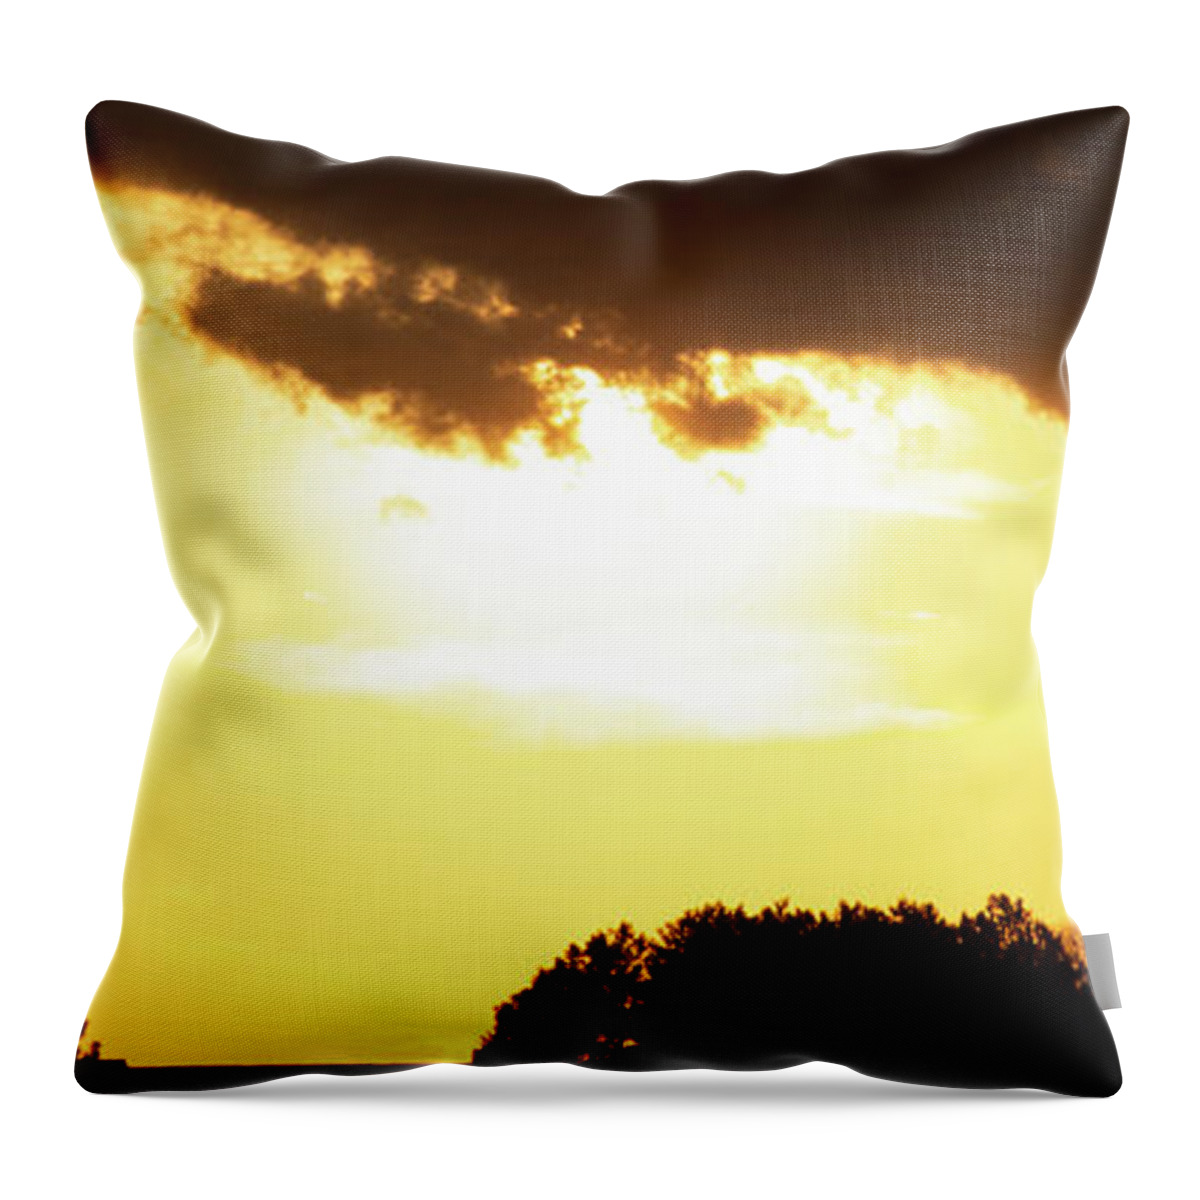 Nebraskasc Throw Pillow featuring the photograph Nebraska Thunderset 018 by Dale Kaminski